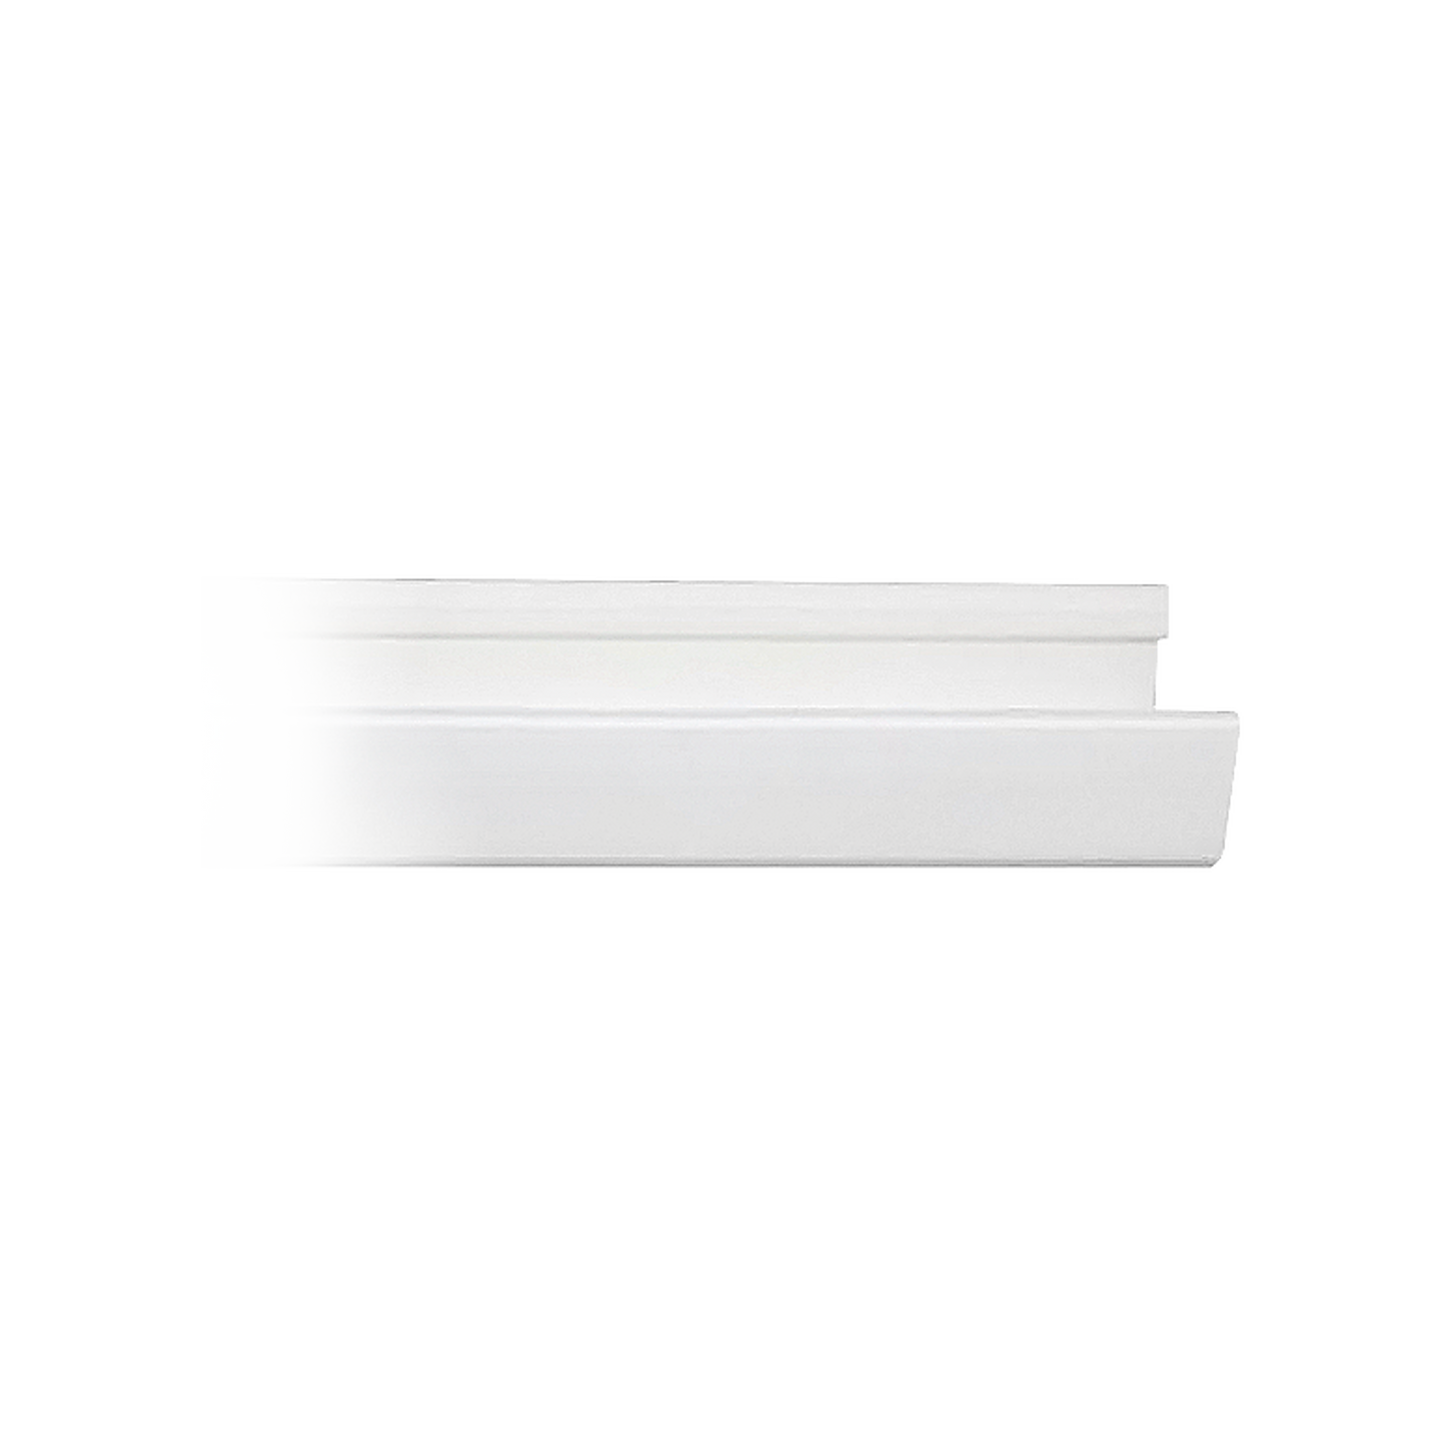 Canaleta blanca de PVC auto extinguible, con 2 plataformas, 4 cinthos TH 190, 2 thornillos 10 x 1 1/2&rdquo;, 2 thorquetes TP2X. (9001-01250)